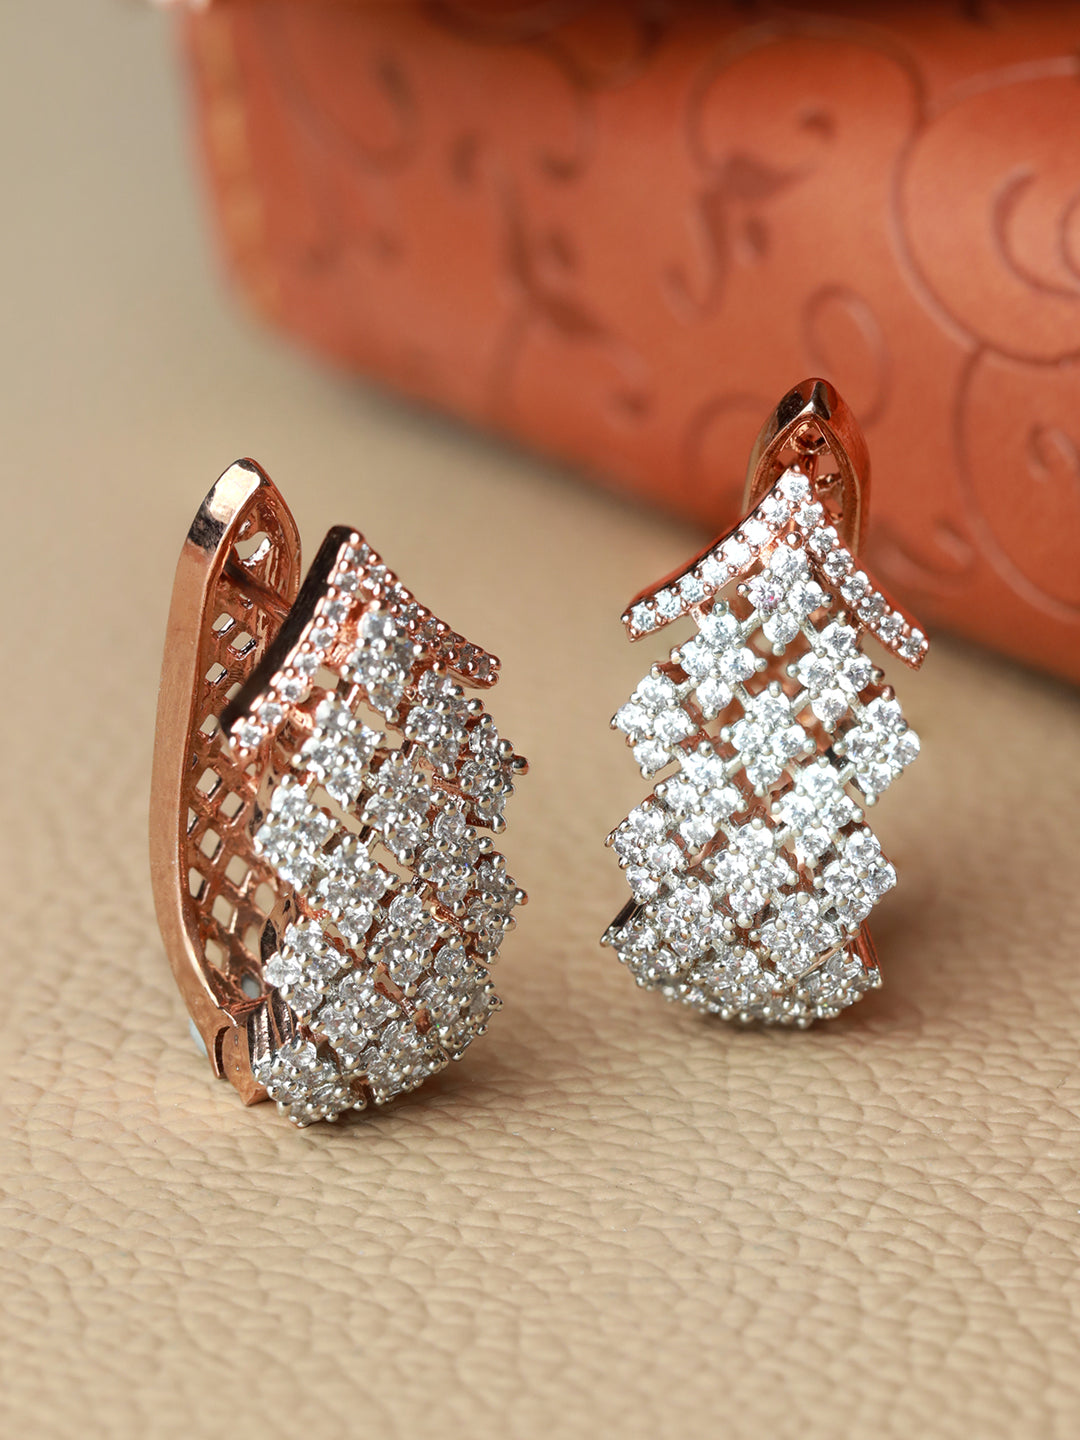 American Diamond Rose Gold Earrings